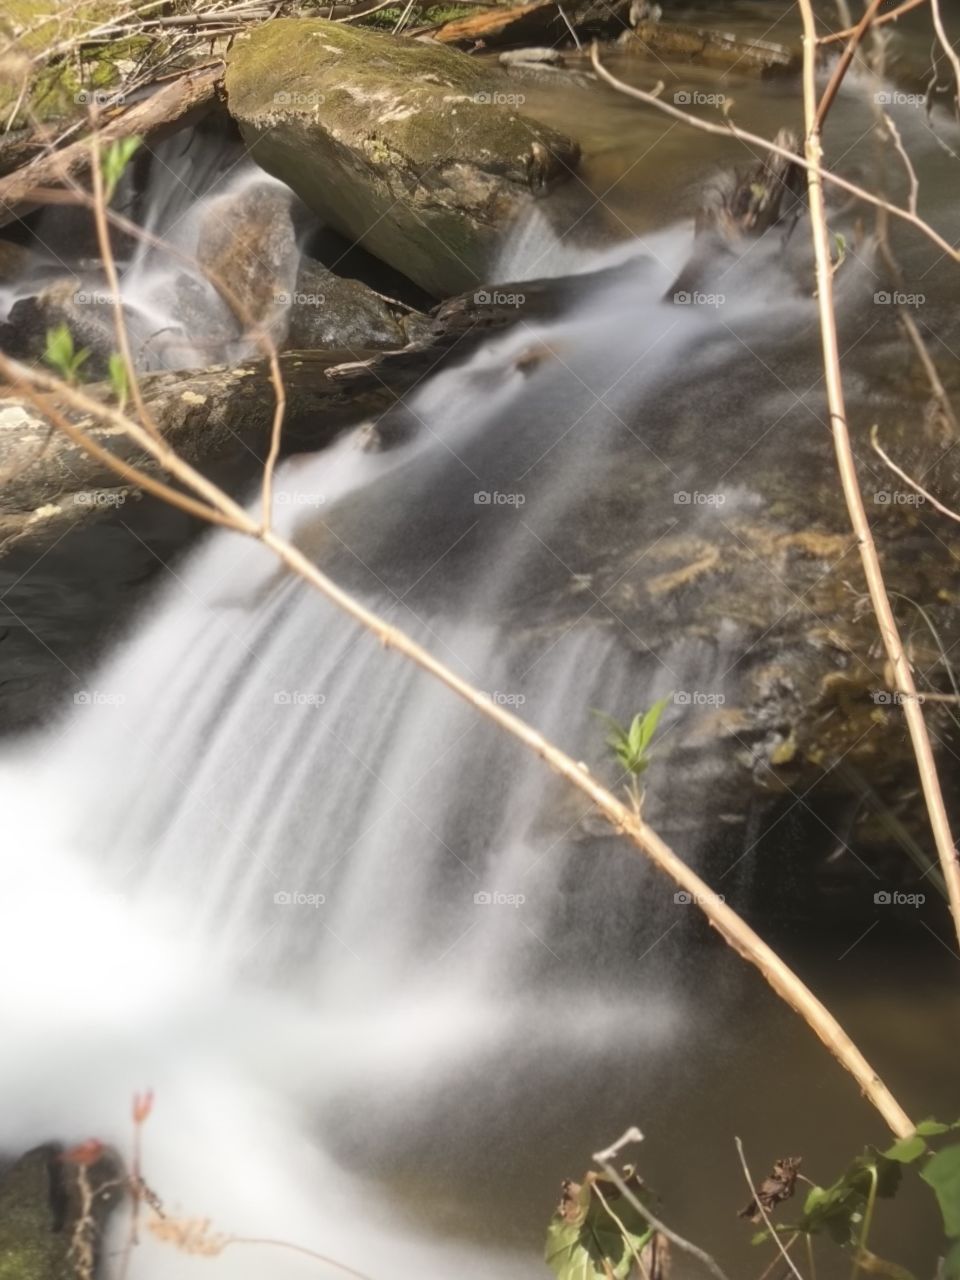 Beautiful take of water in motion. 